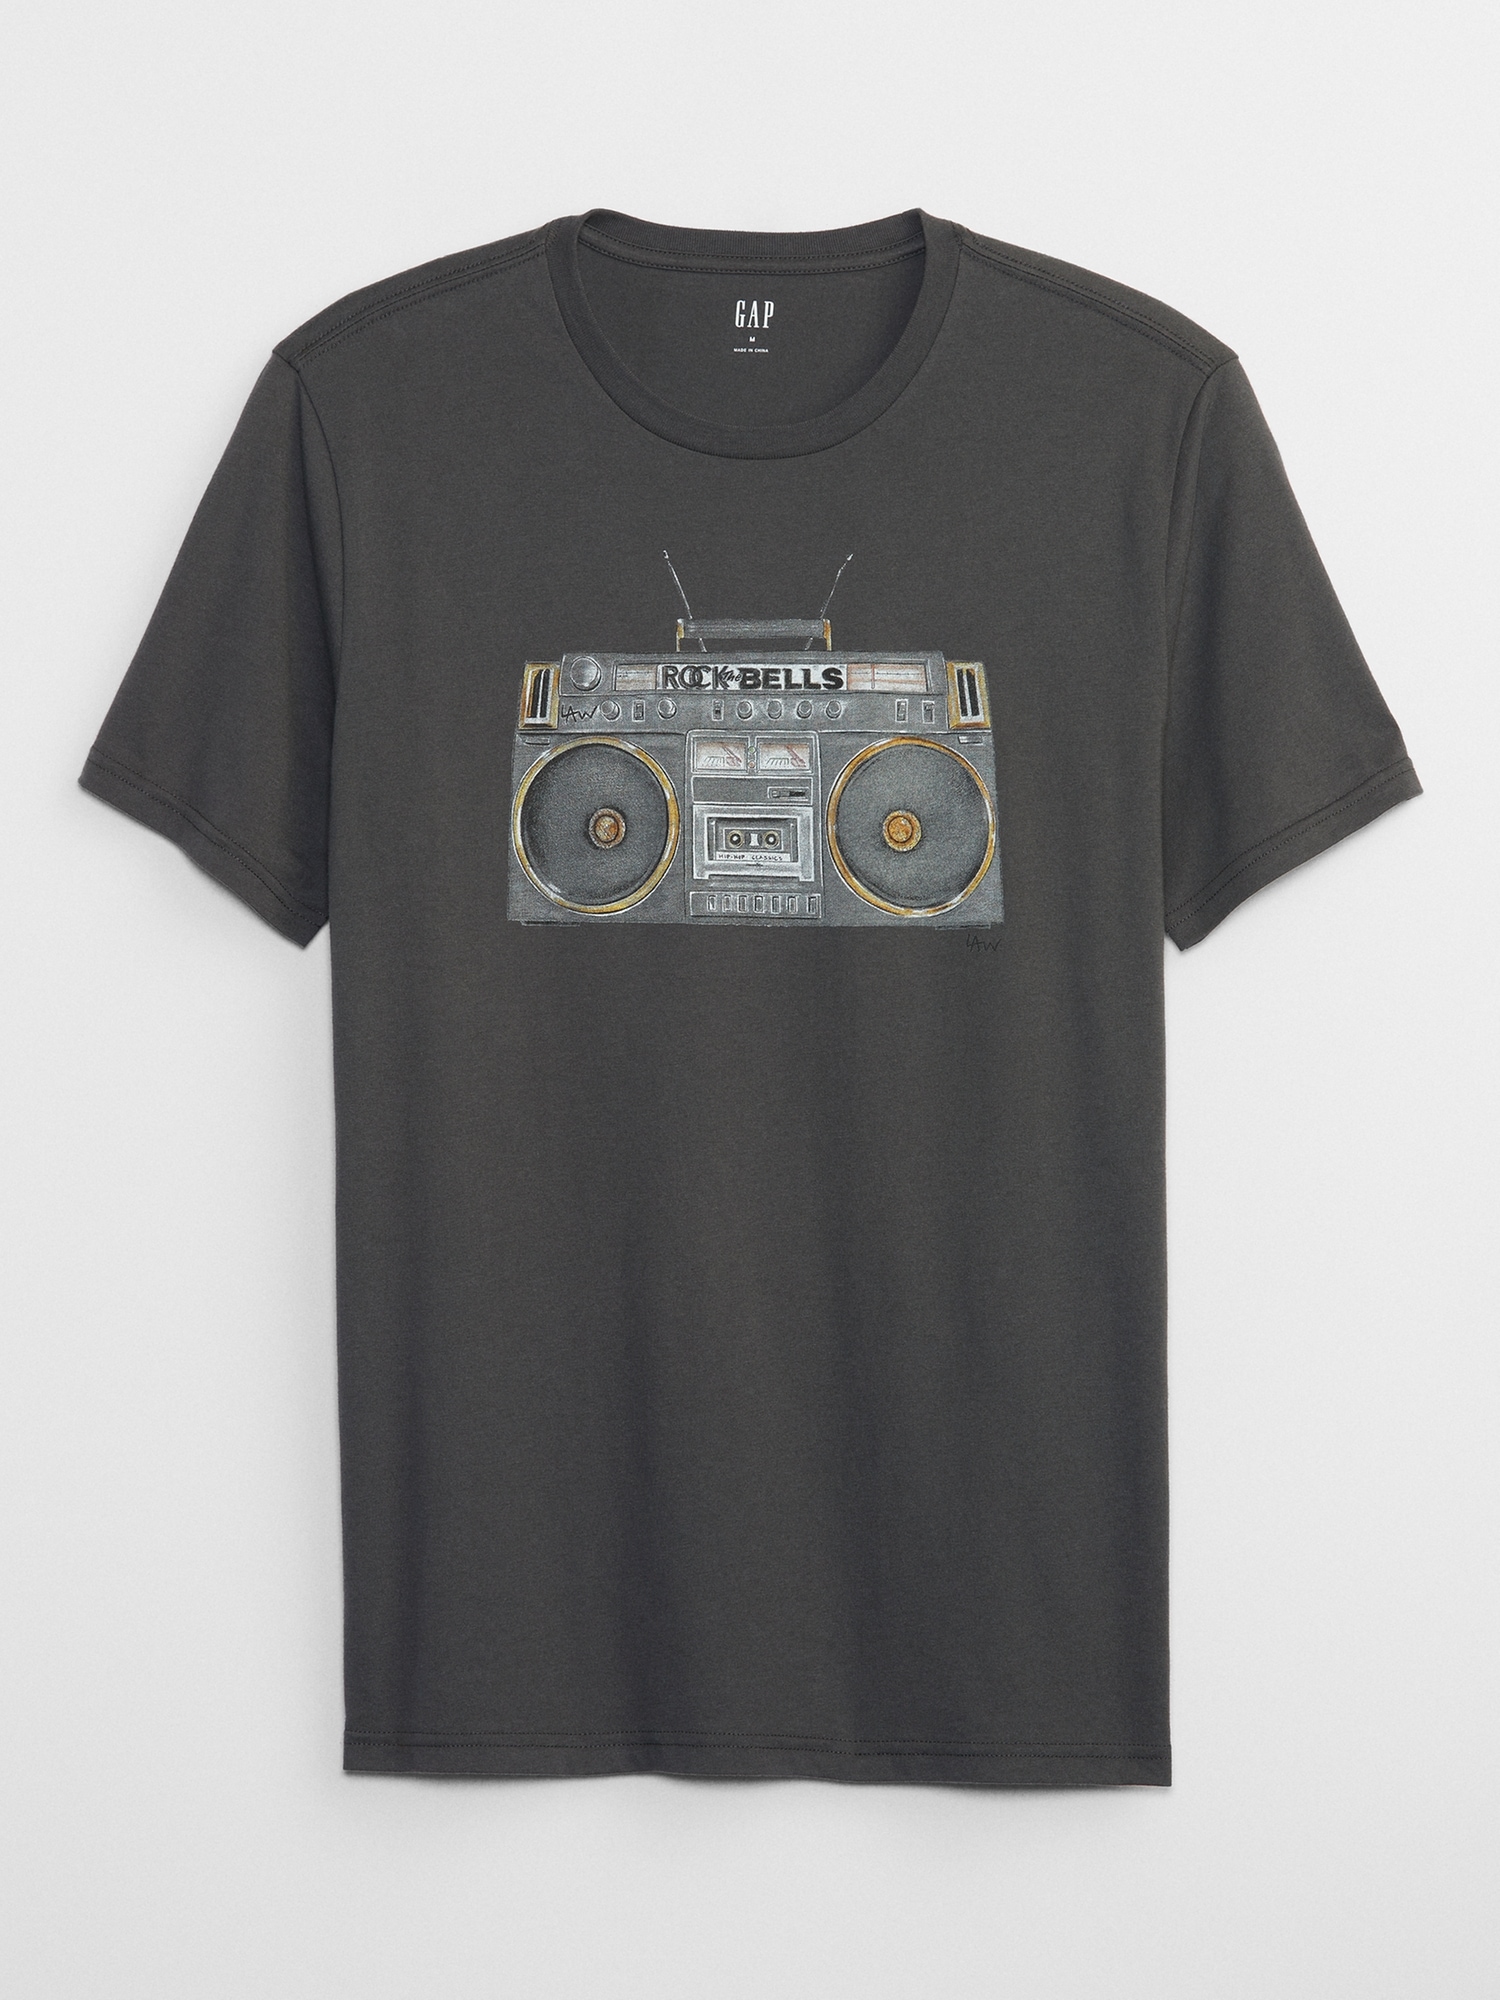 Rock the Bells Graphic T-Shirt | Gap Factory